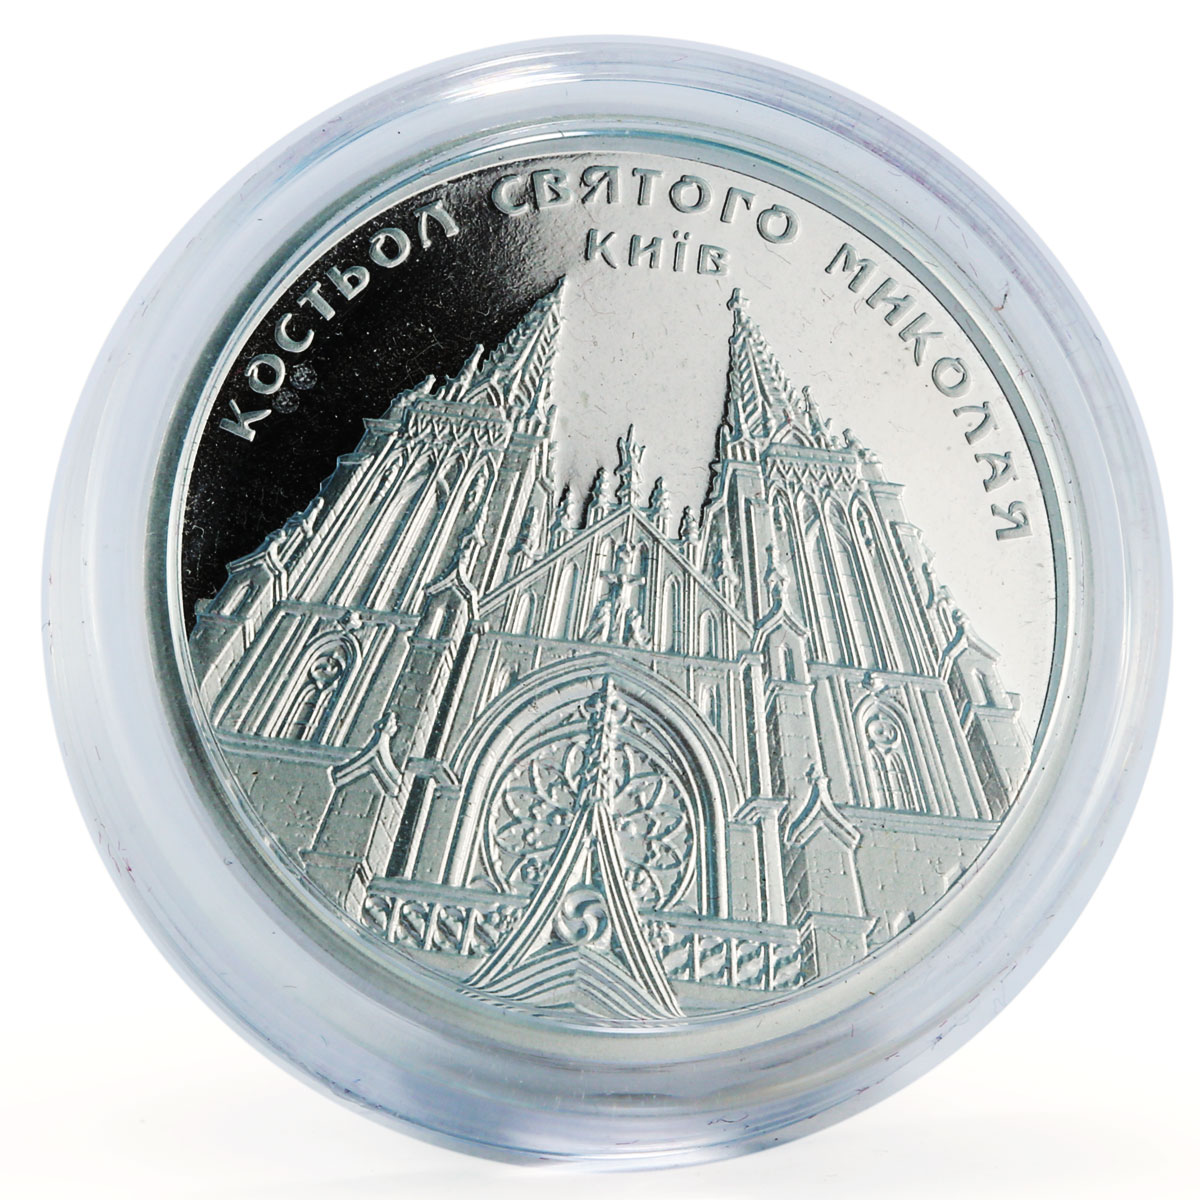 Ukraine 10 hryvnia St. Nicholas Roman Catholic Cathedral Kyiv silver coin 2016